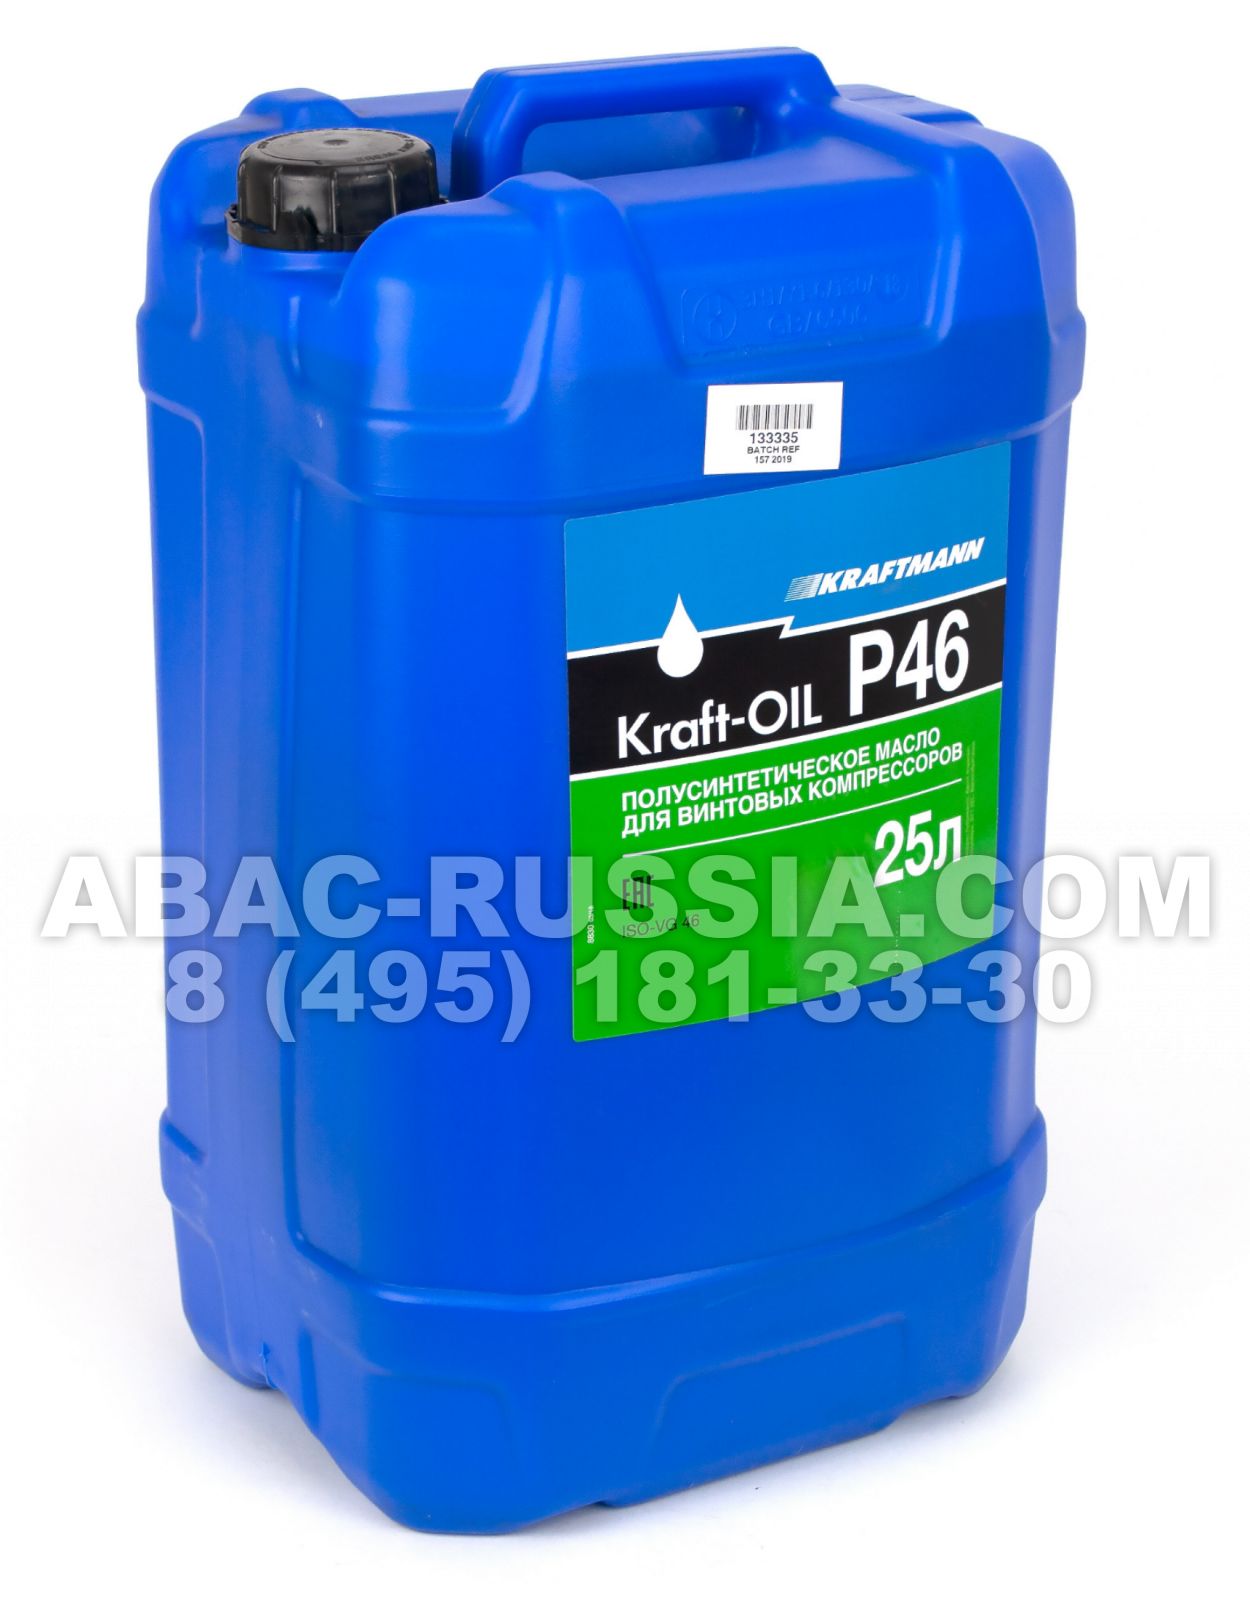 Компрессорное масло Kraft-OIL P46 25L